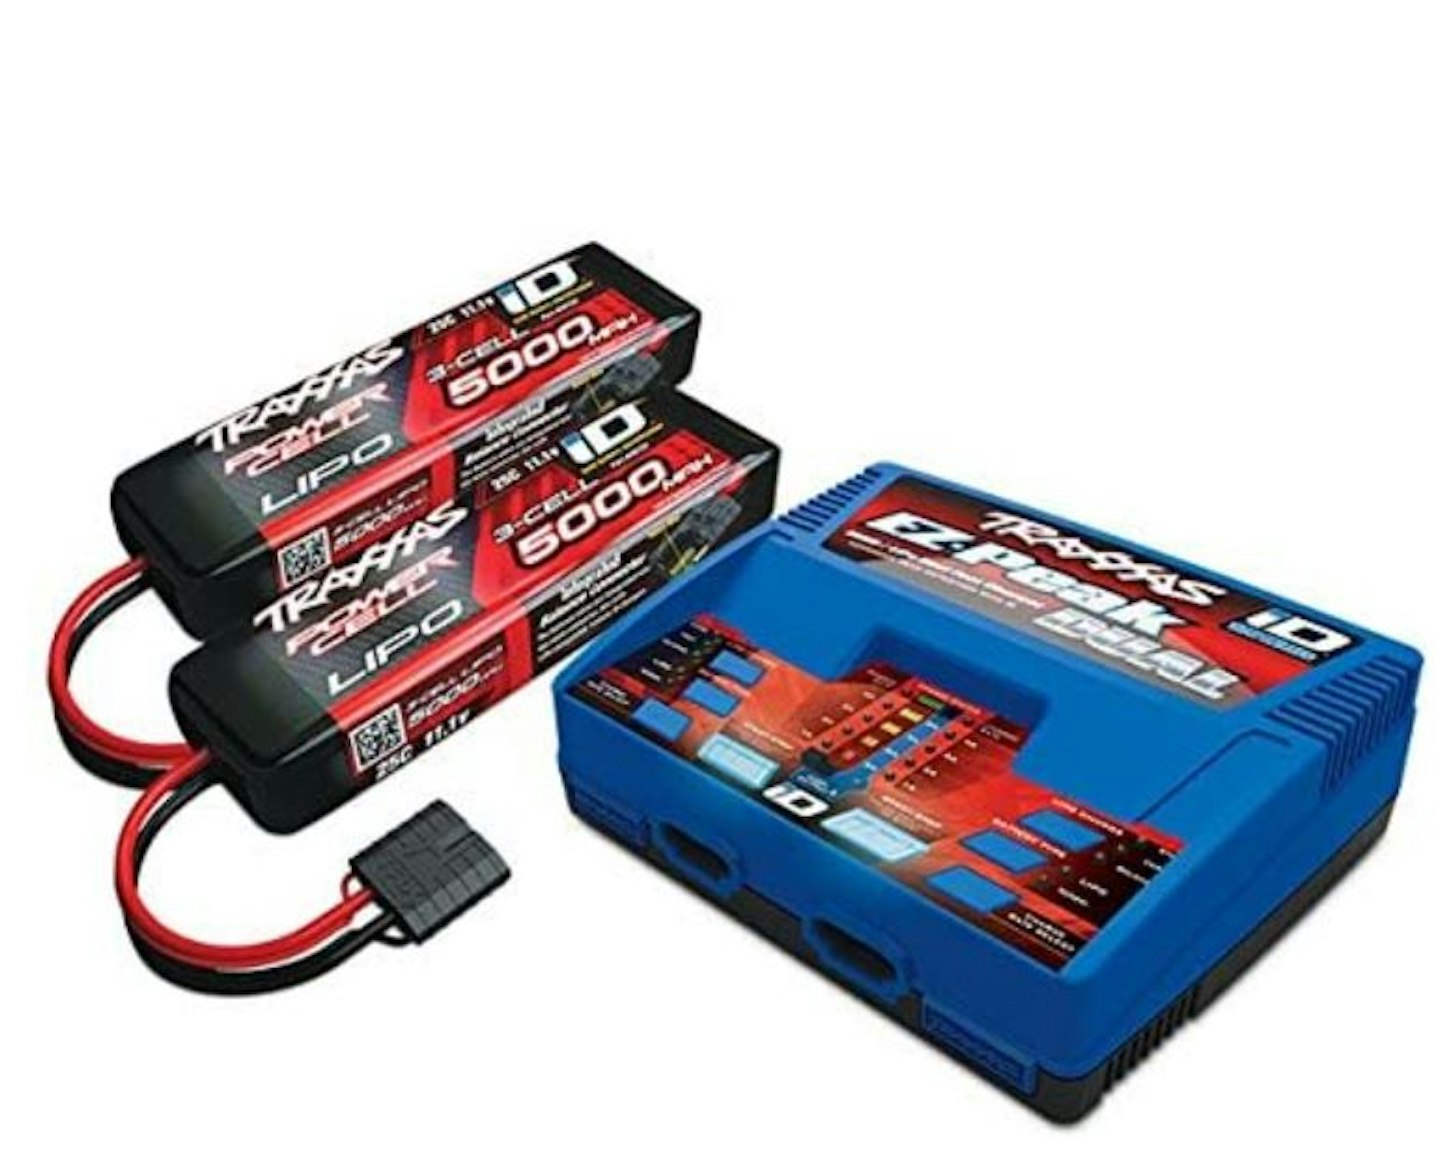 Traxxas EZ-Peak Charger & x2 5000mAh LiPo Batteries